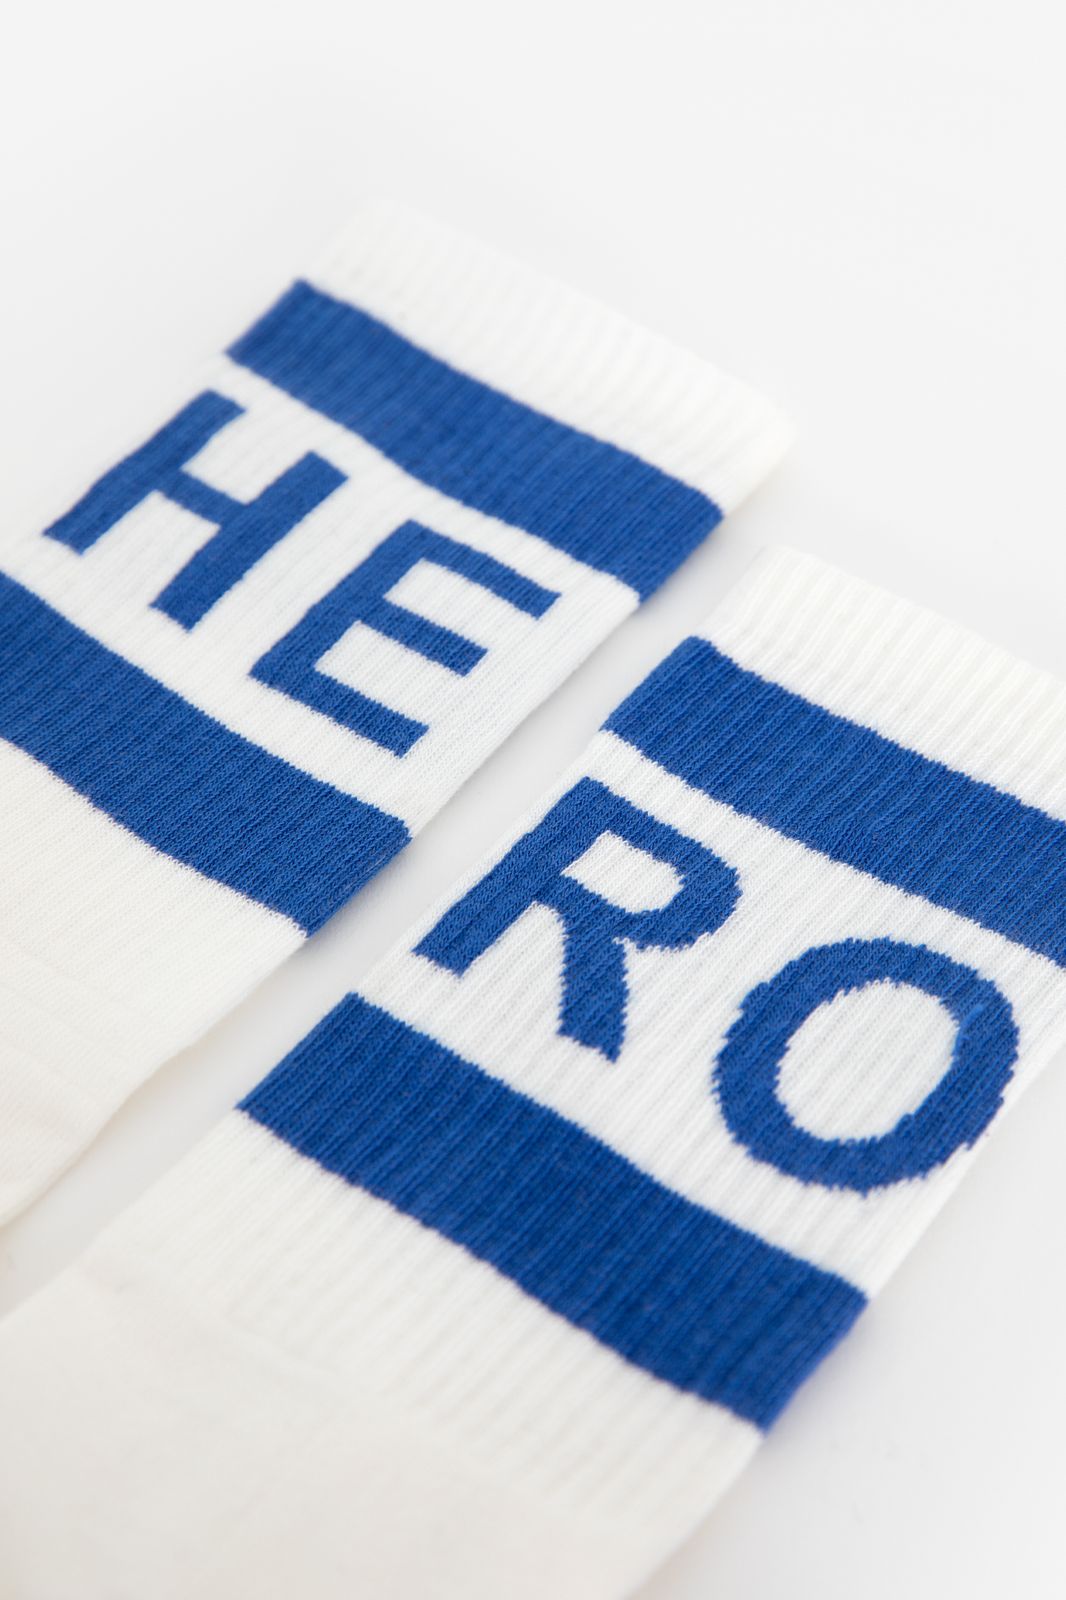 Heroes on socks Chaussettes vintage - bleu/blanc